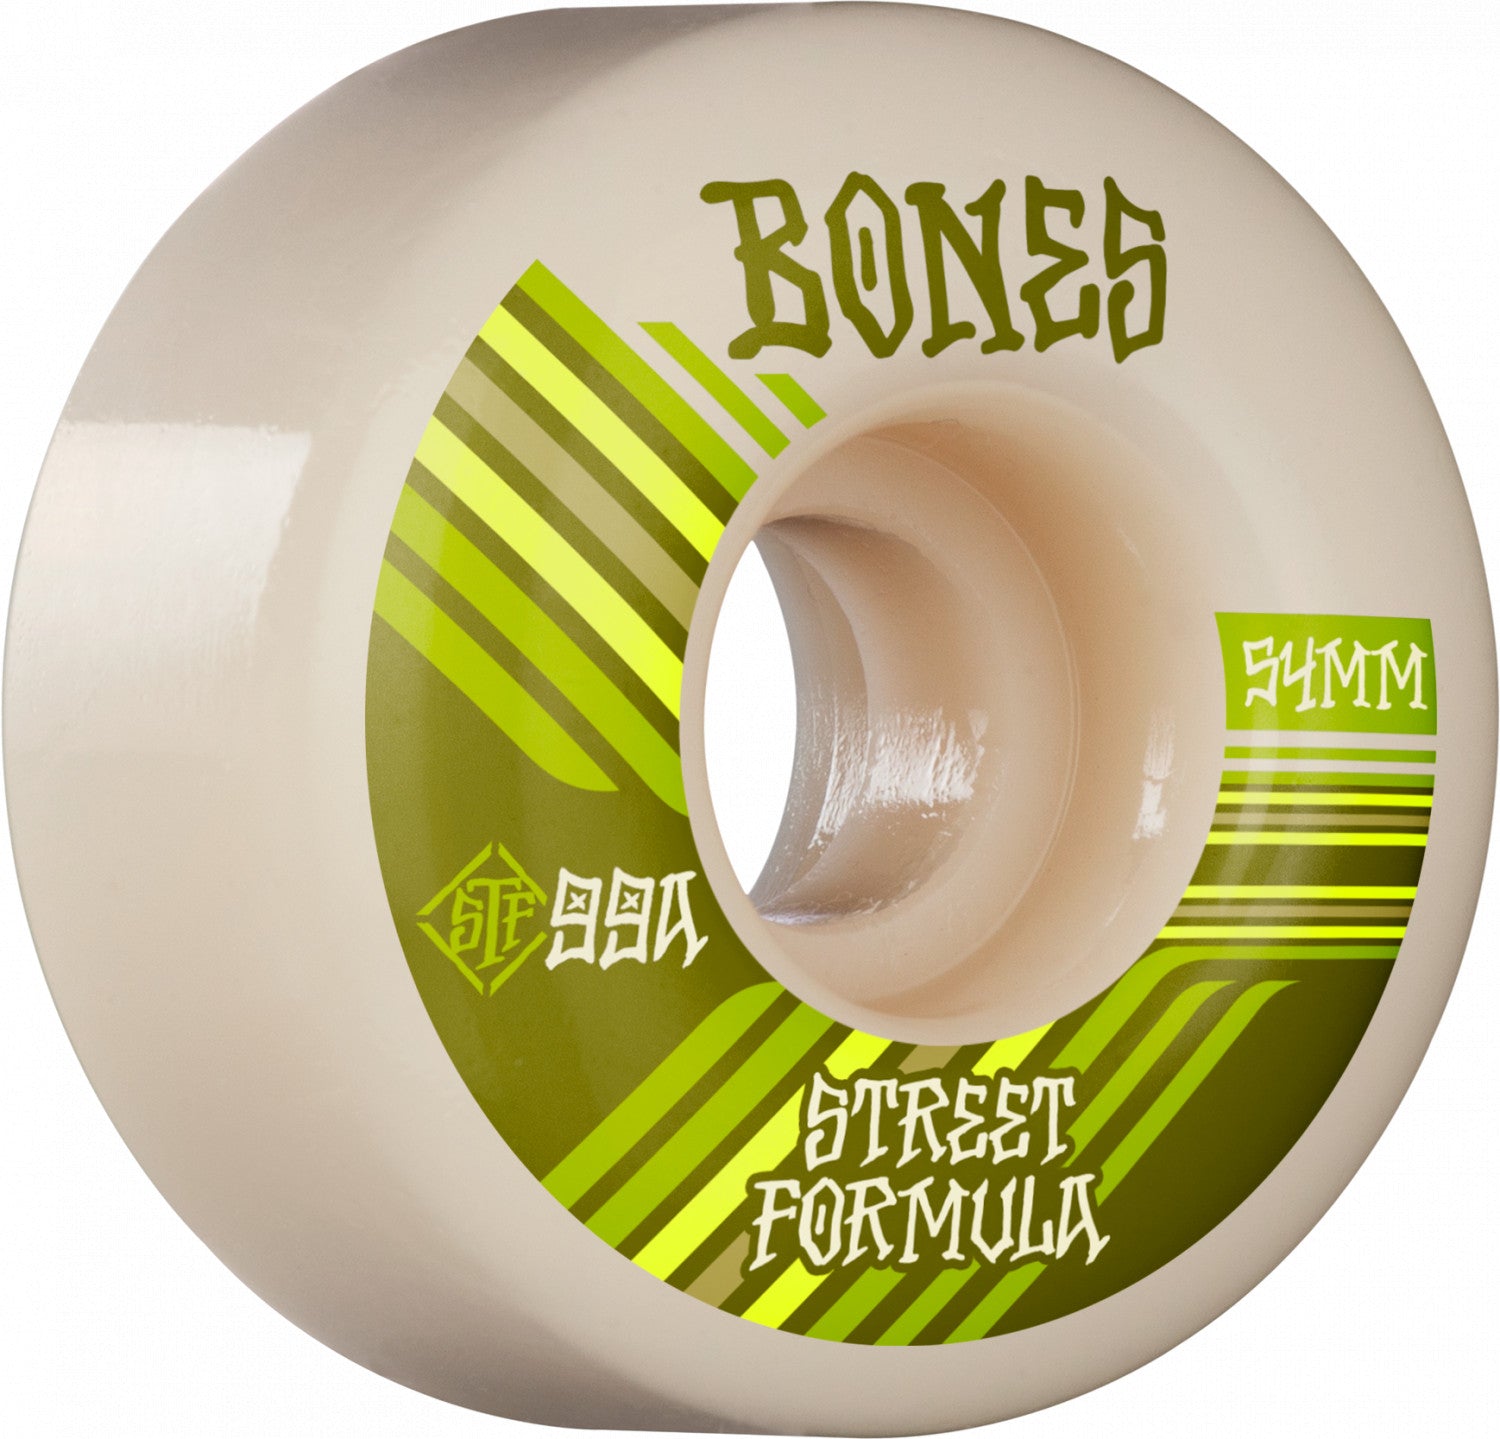 Bones Retros V4 Wide Wheels, 54mm/99a